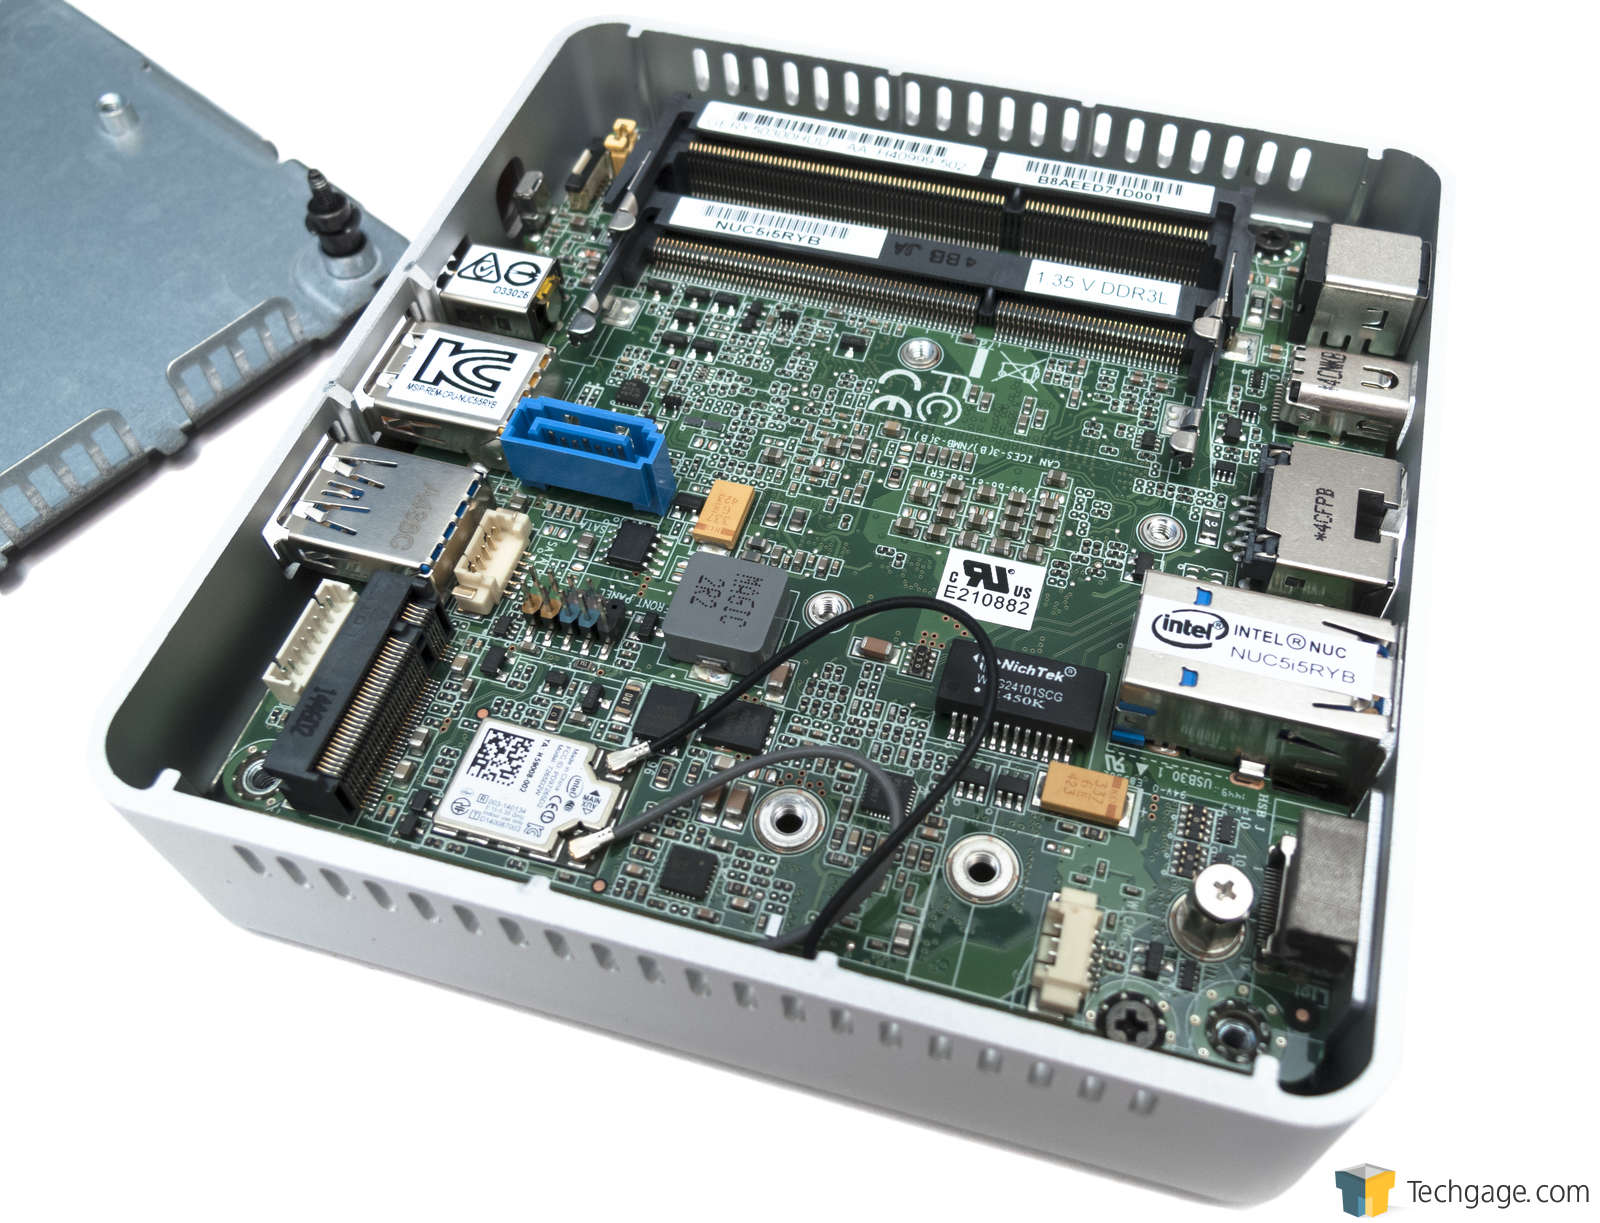 Intel NUC Core i5 (NUC5i5RYK) review